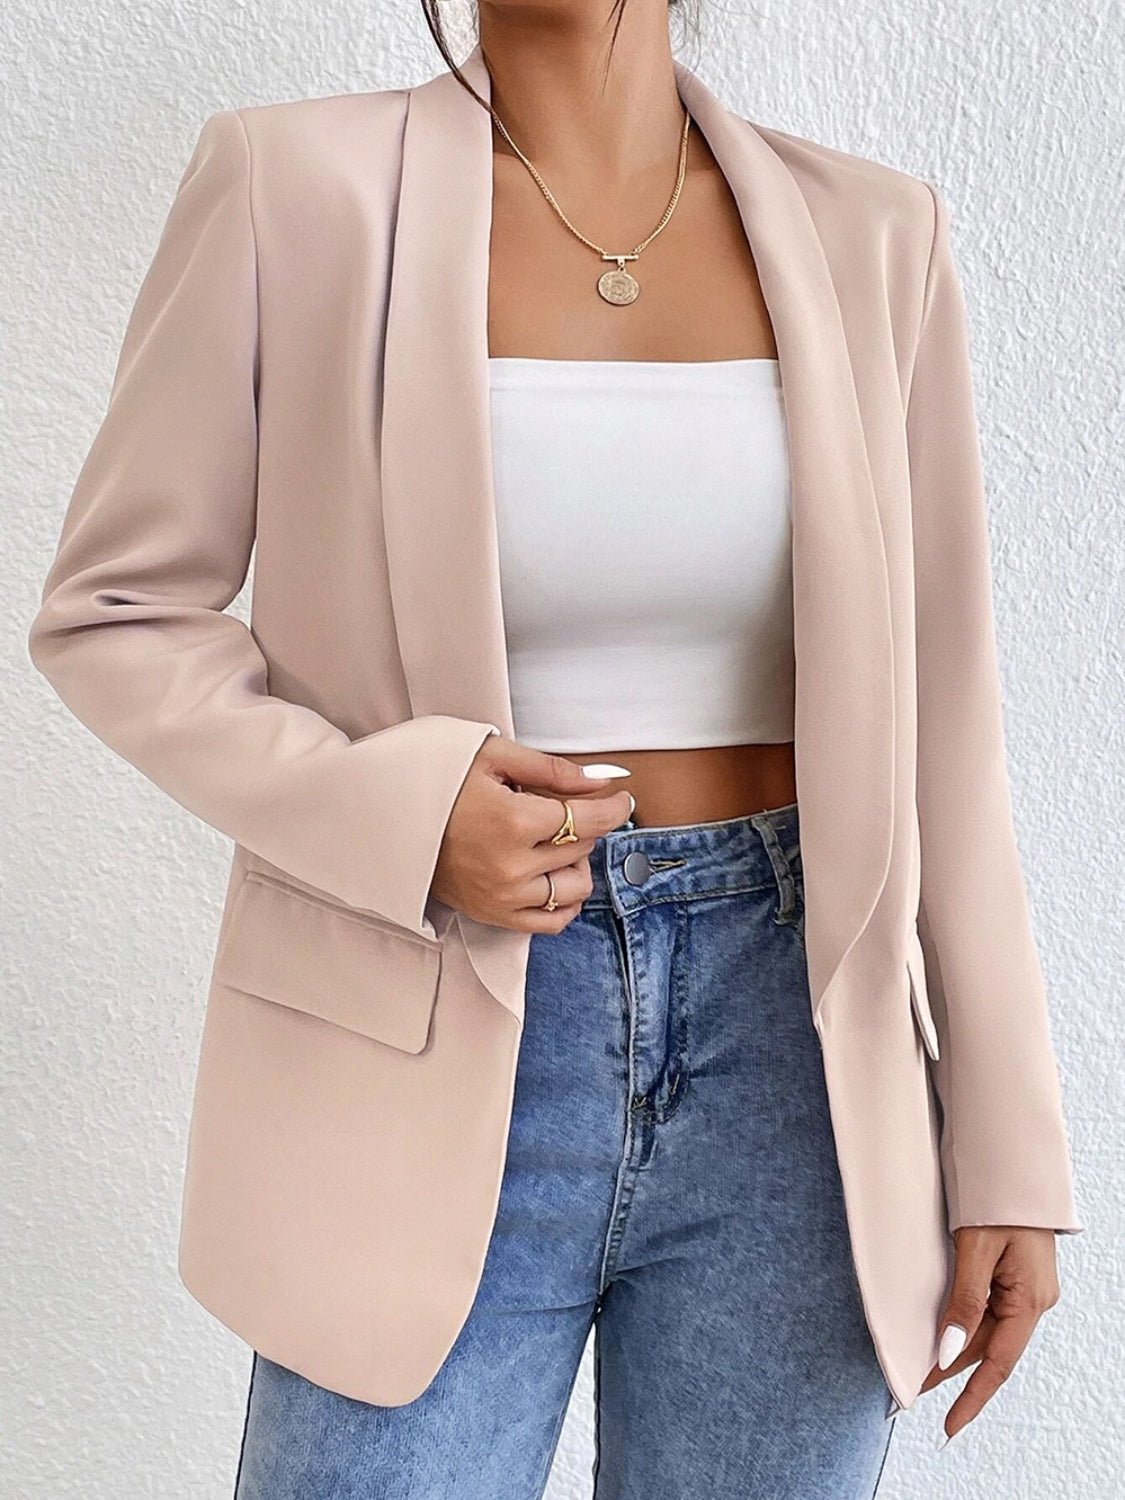 Shawl Collar Long Sleeve Blazer - Fashion Girl Online Store